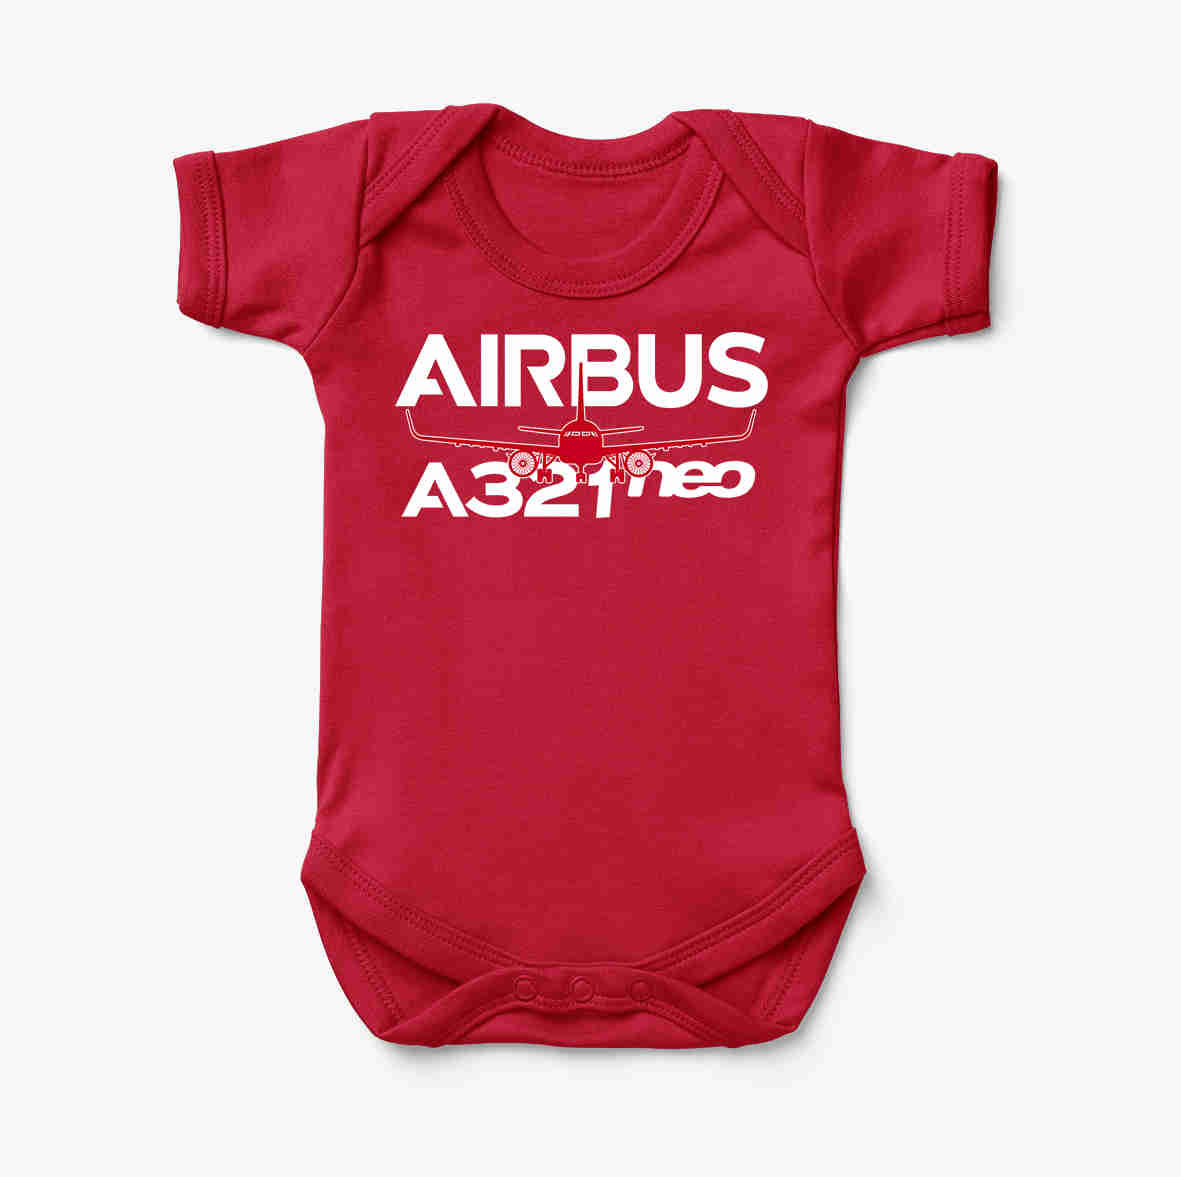 Amazing Airbus A321neo Designed Baby Bodysuits